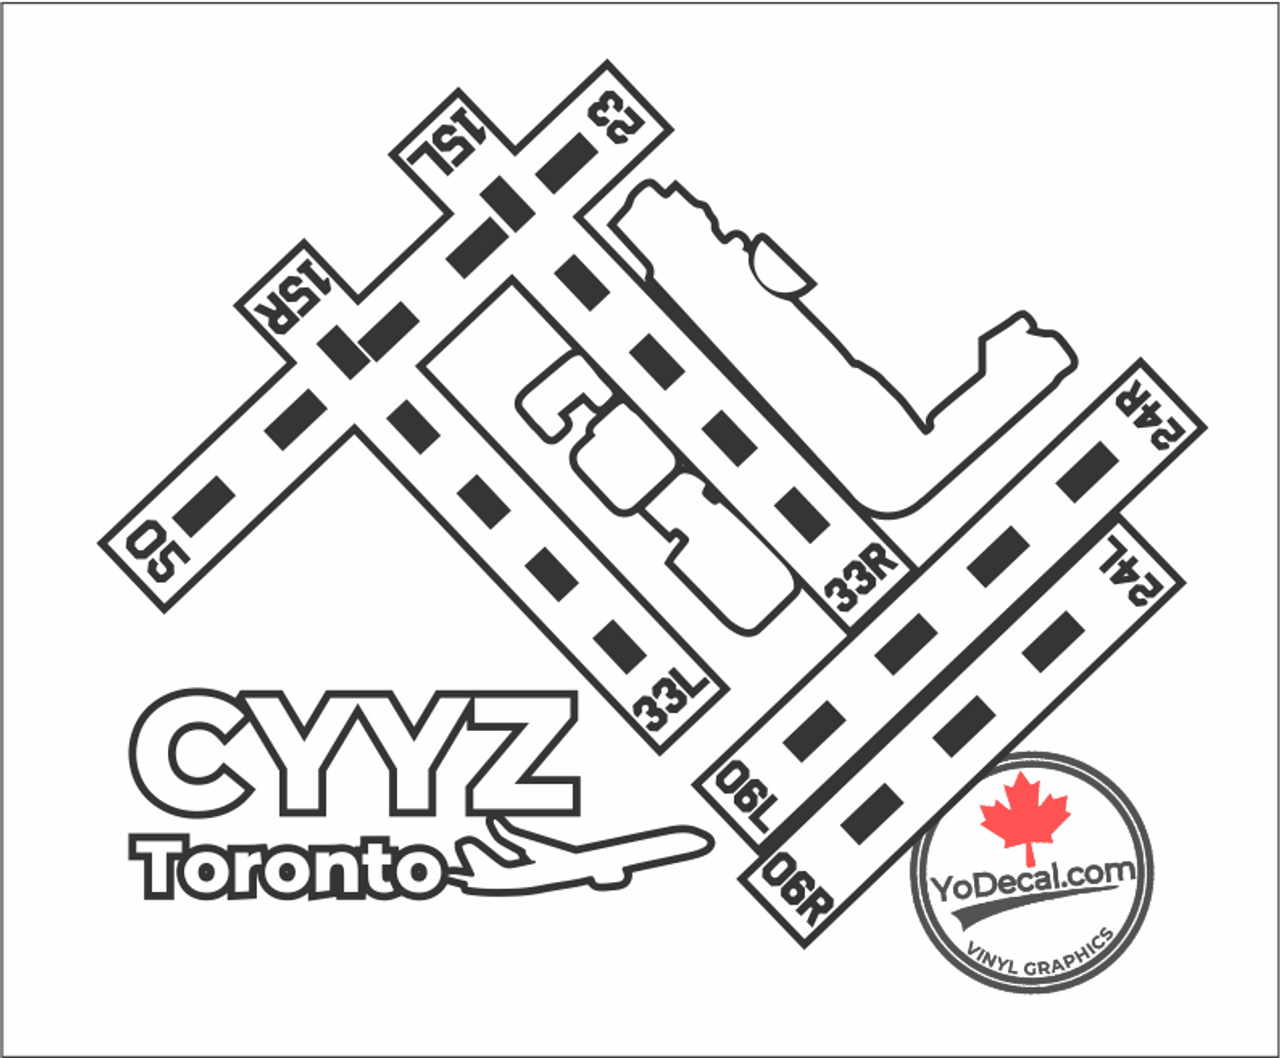 CYYZ Runway Layout Vinyl Decal - White